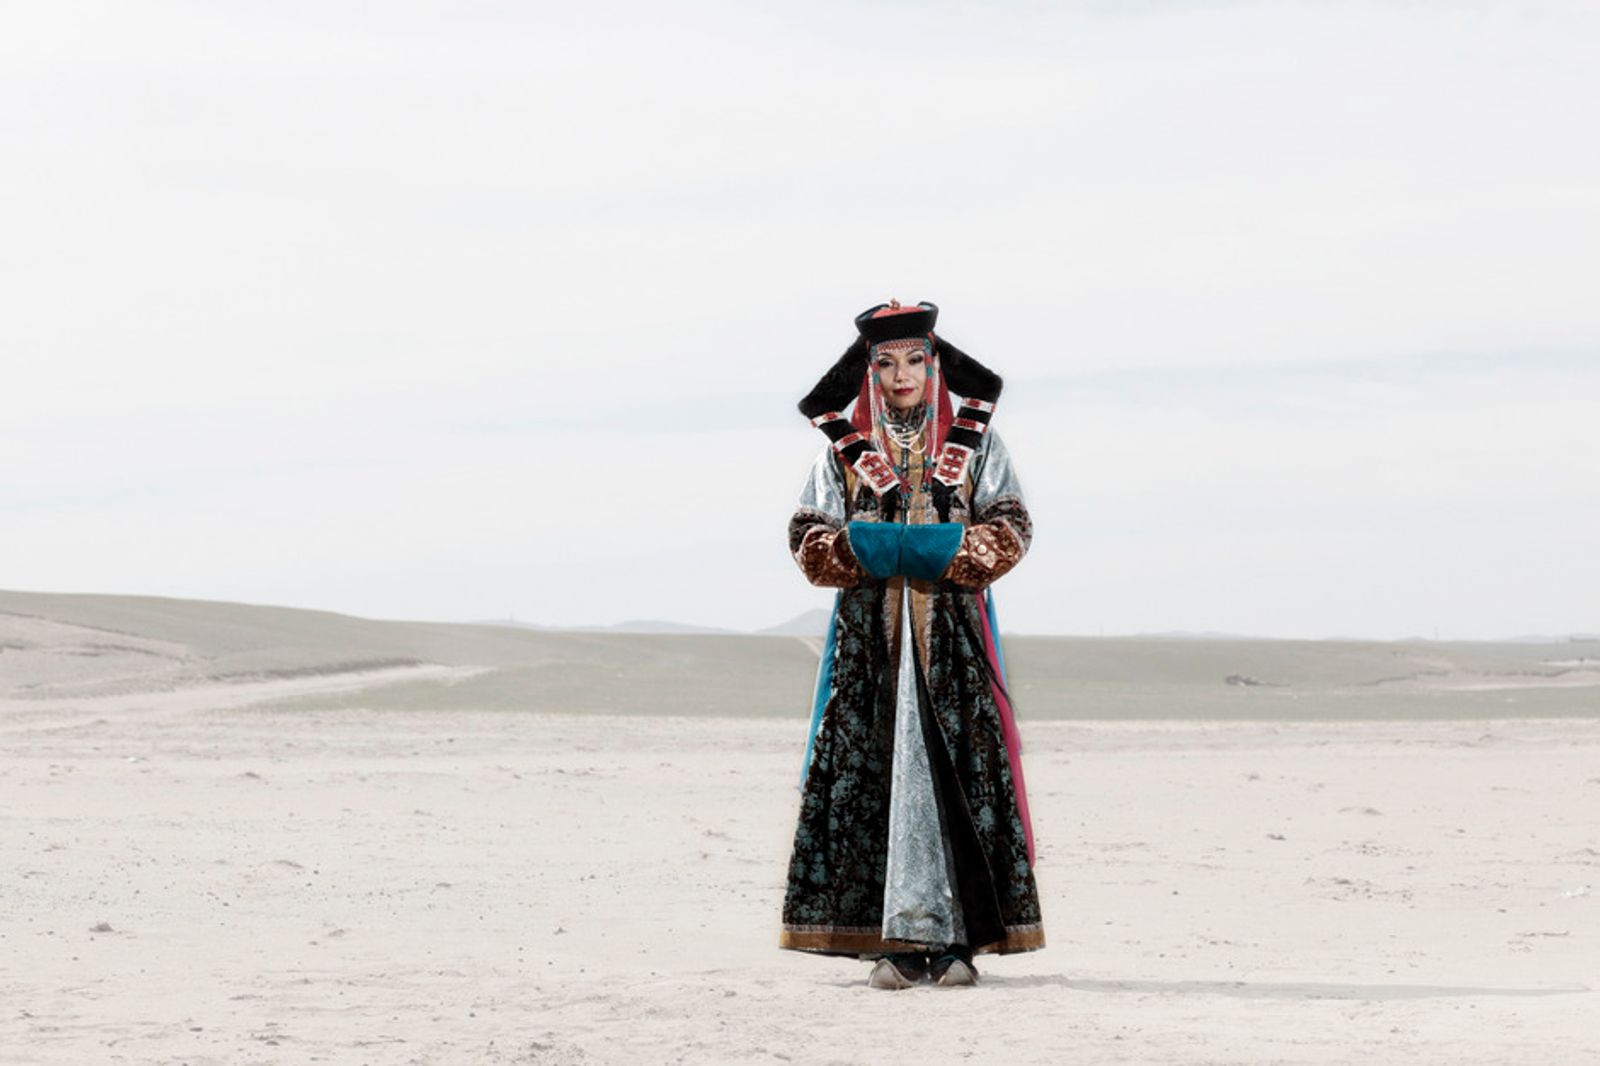 © Alvaro Laiz - Margaash on a traditional queen costume